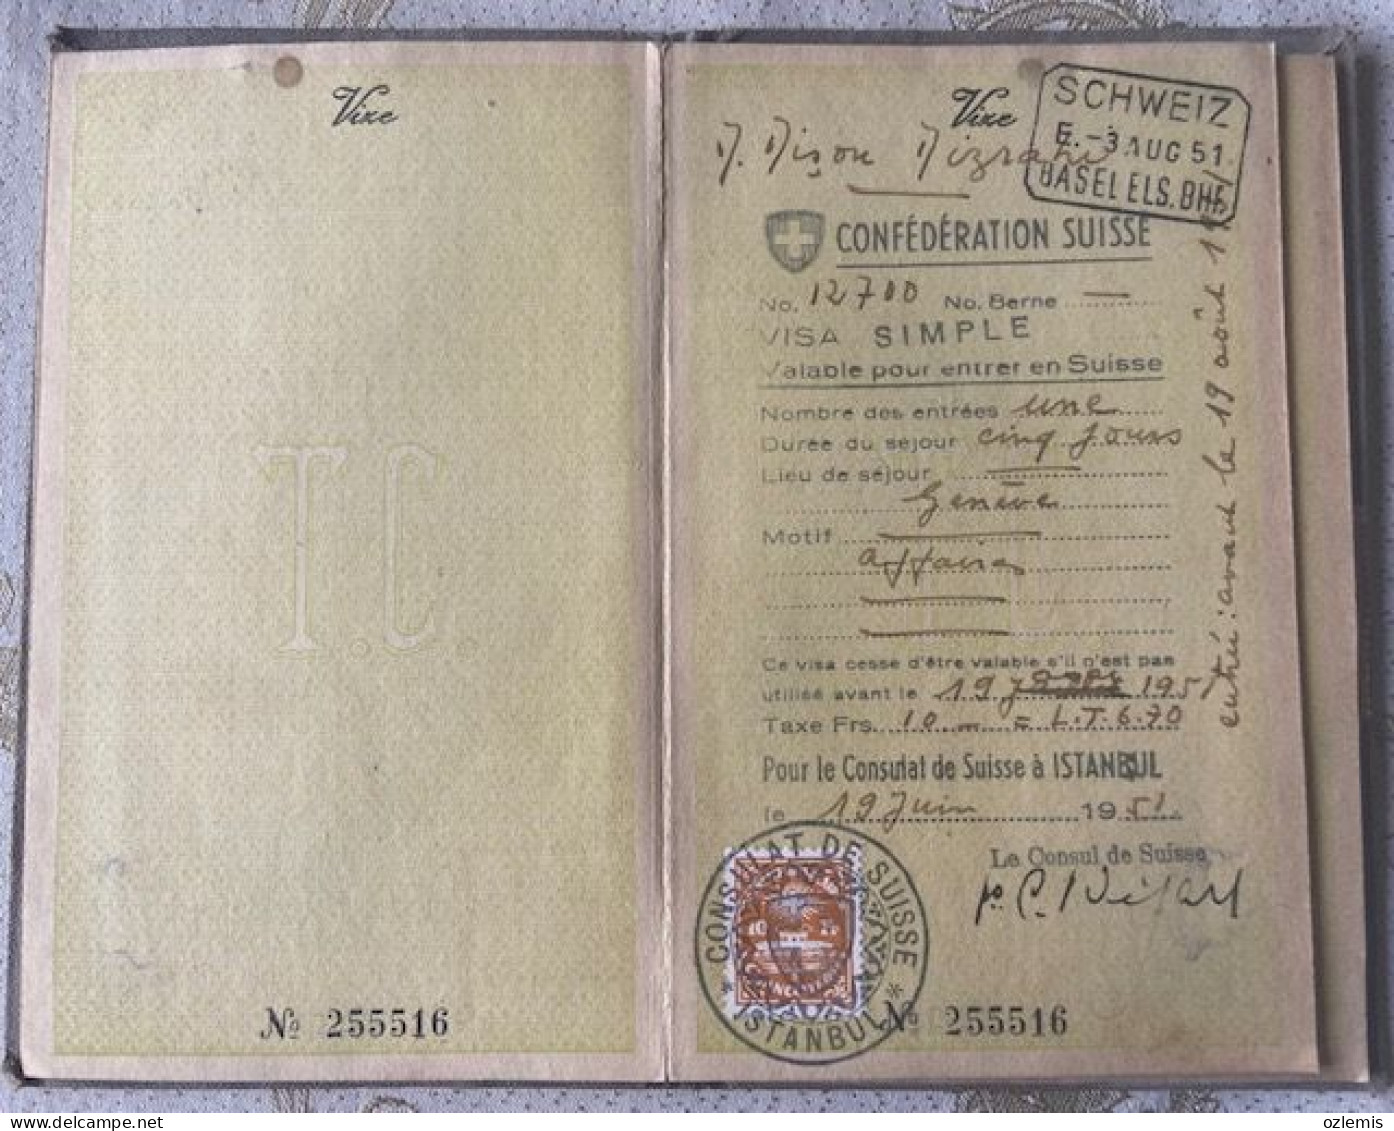 PASSPORT,PASSEPORT,1951,USED,DEUTSCHLAND,UNITED KINGDOM,FRANCE,ITALIA,OSTERREICH,SUISSE,VISA AND FISCAL